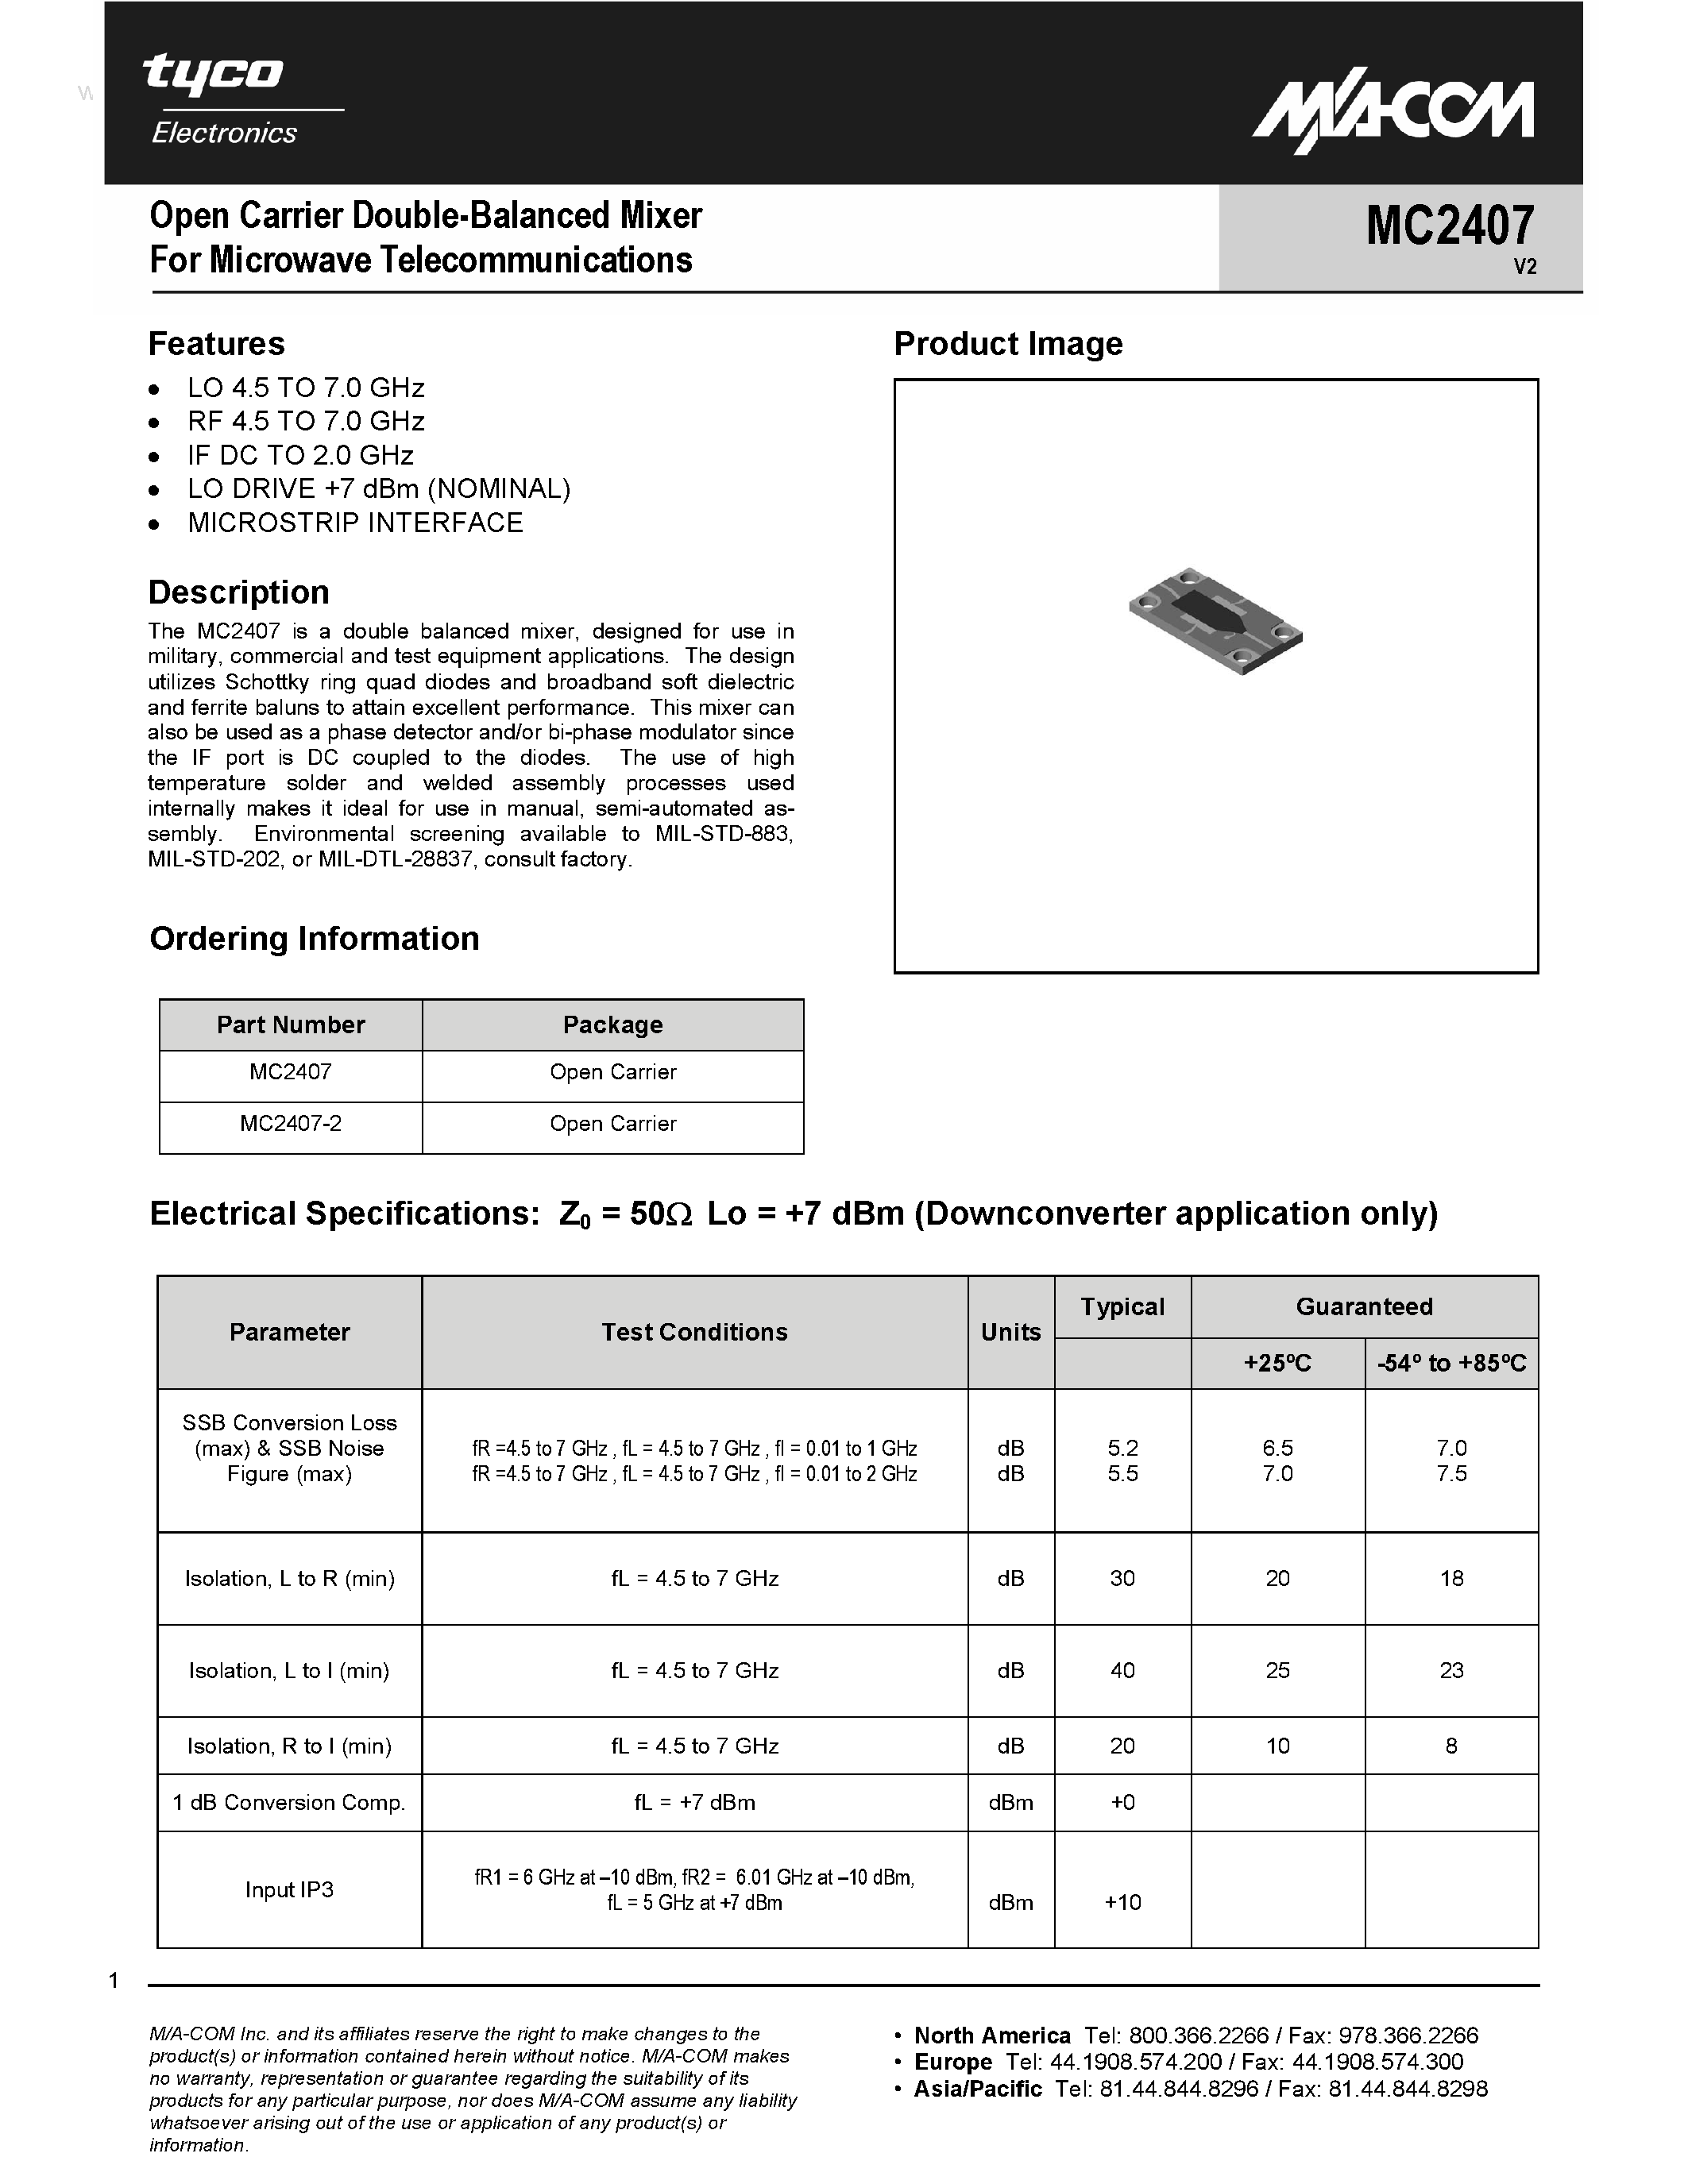 Datasheet MC2407 - Open Carrier Double-Balanced Mixer page 1